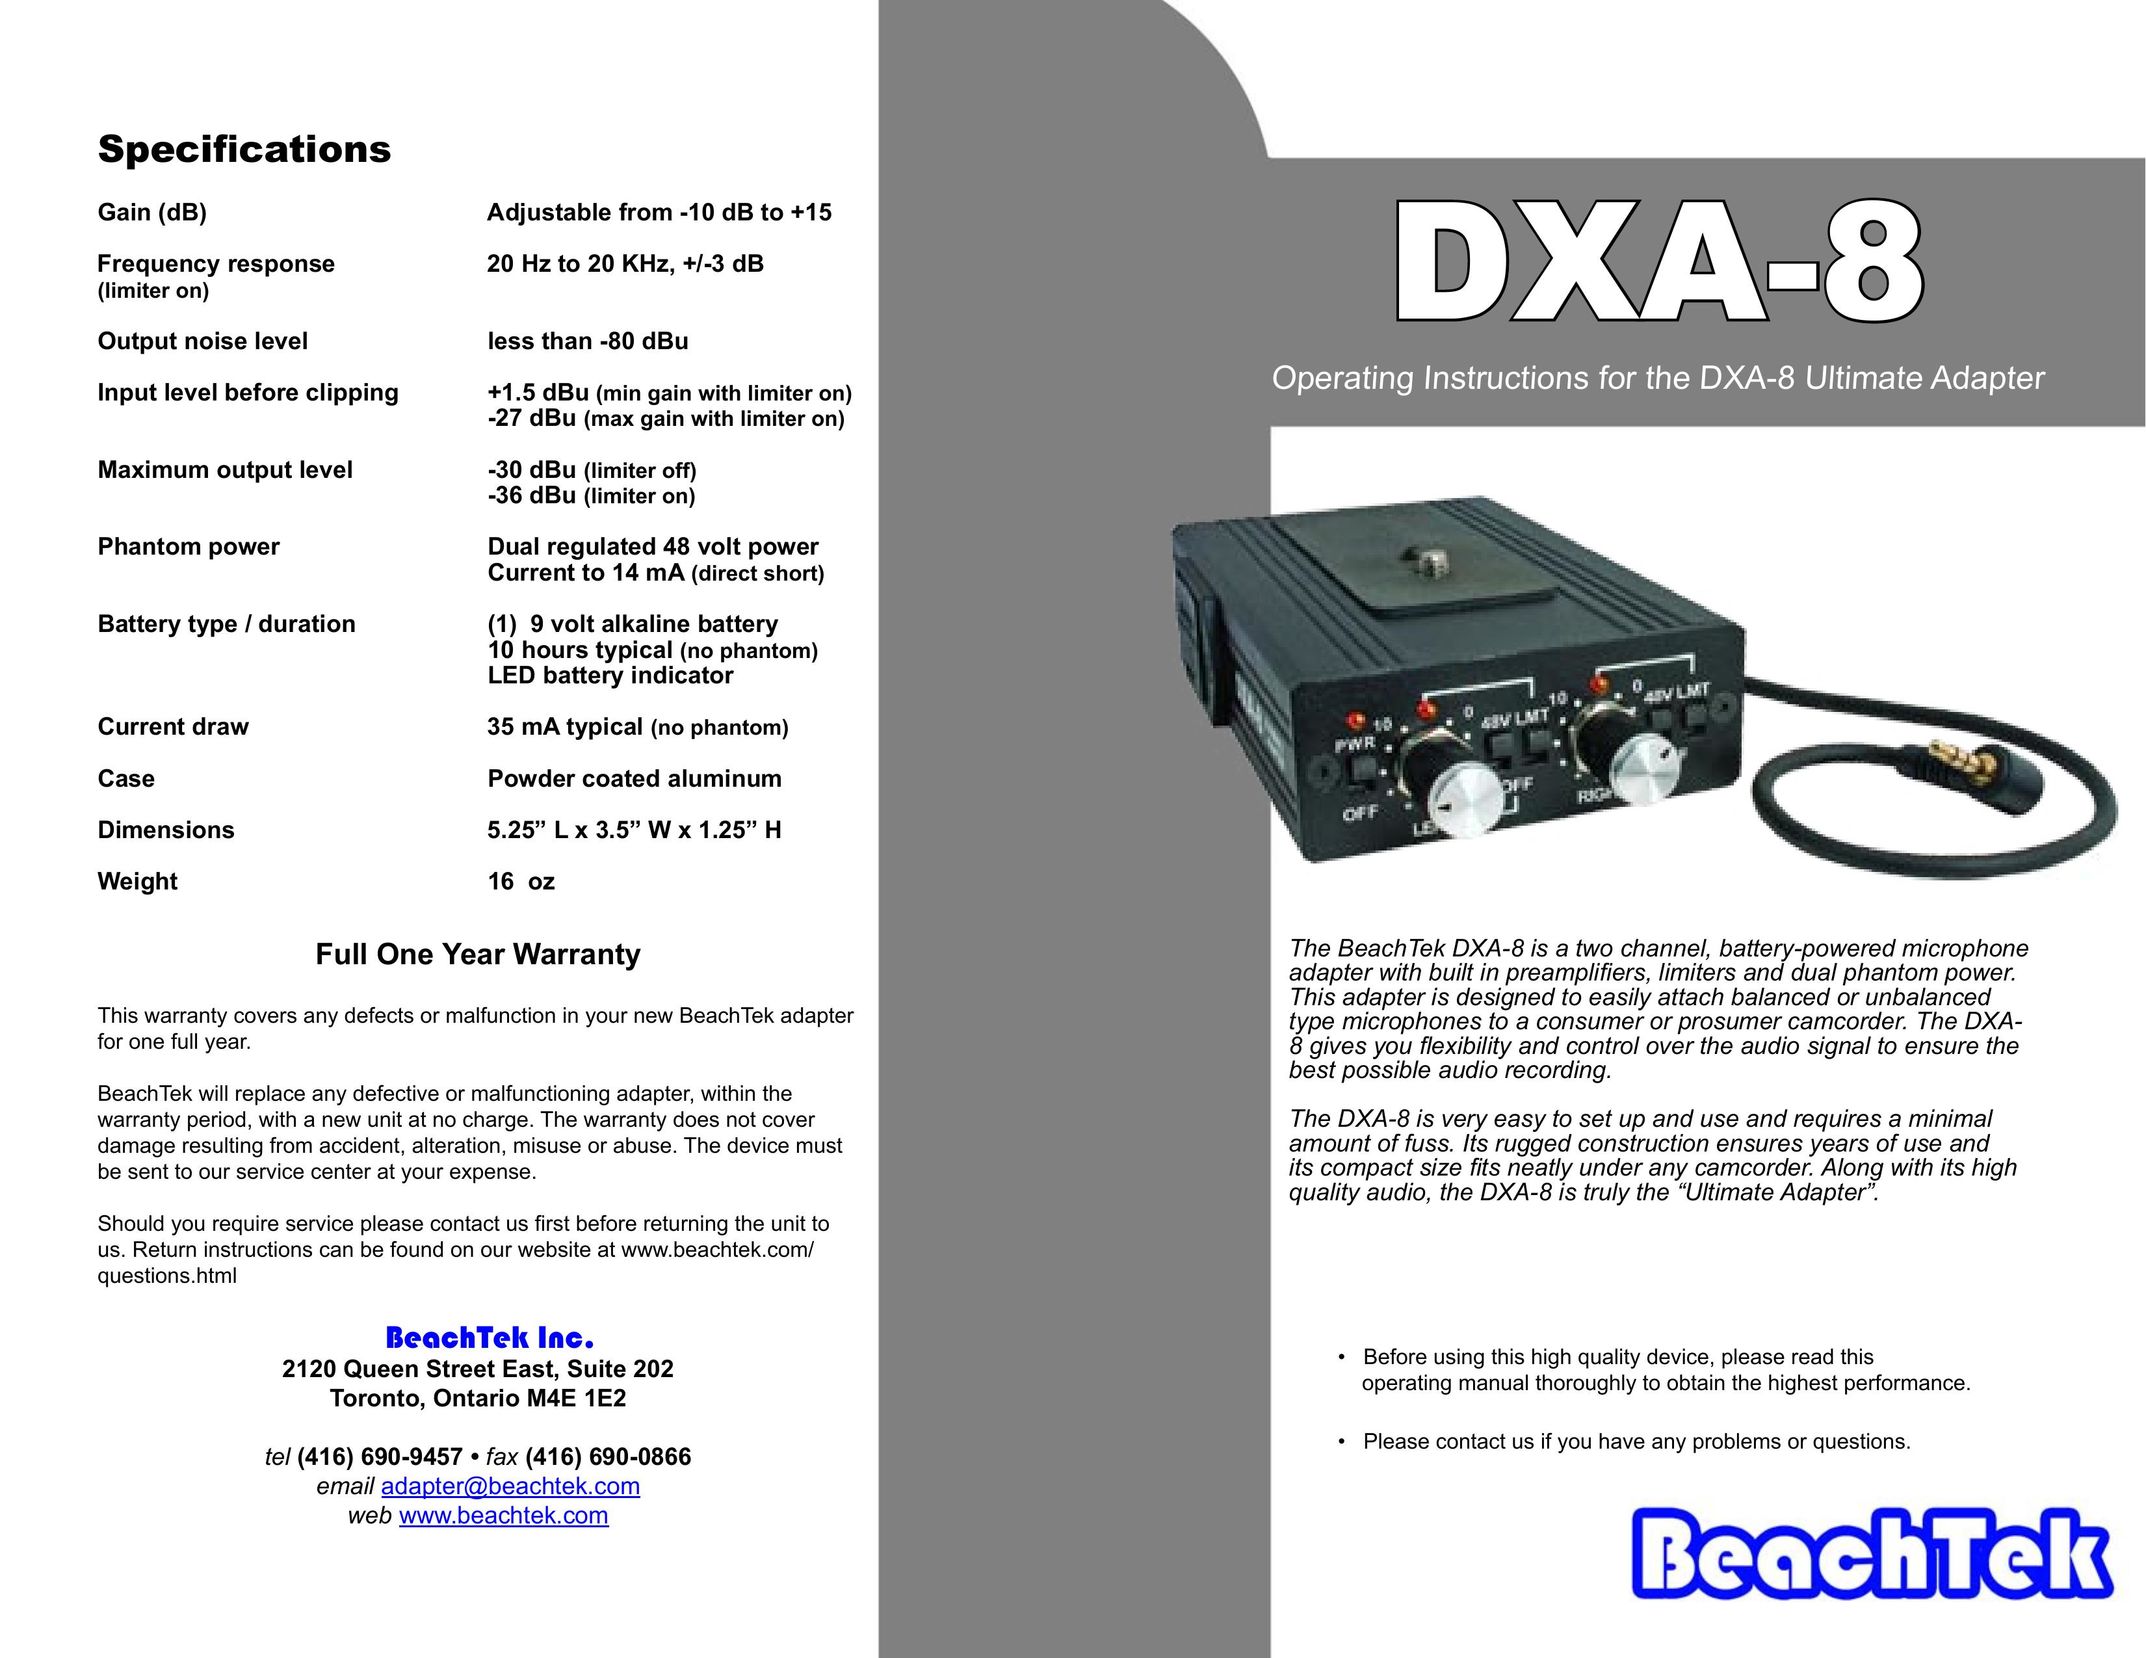 BeachTek DXA-8 Network Card User Manual